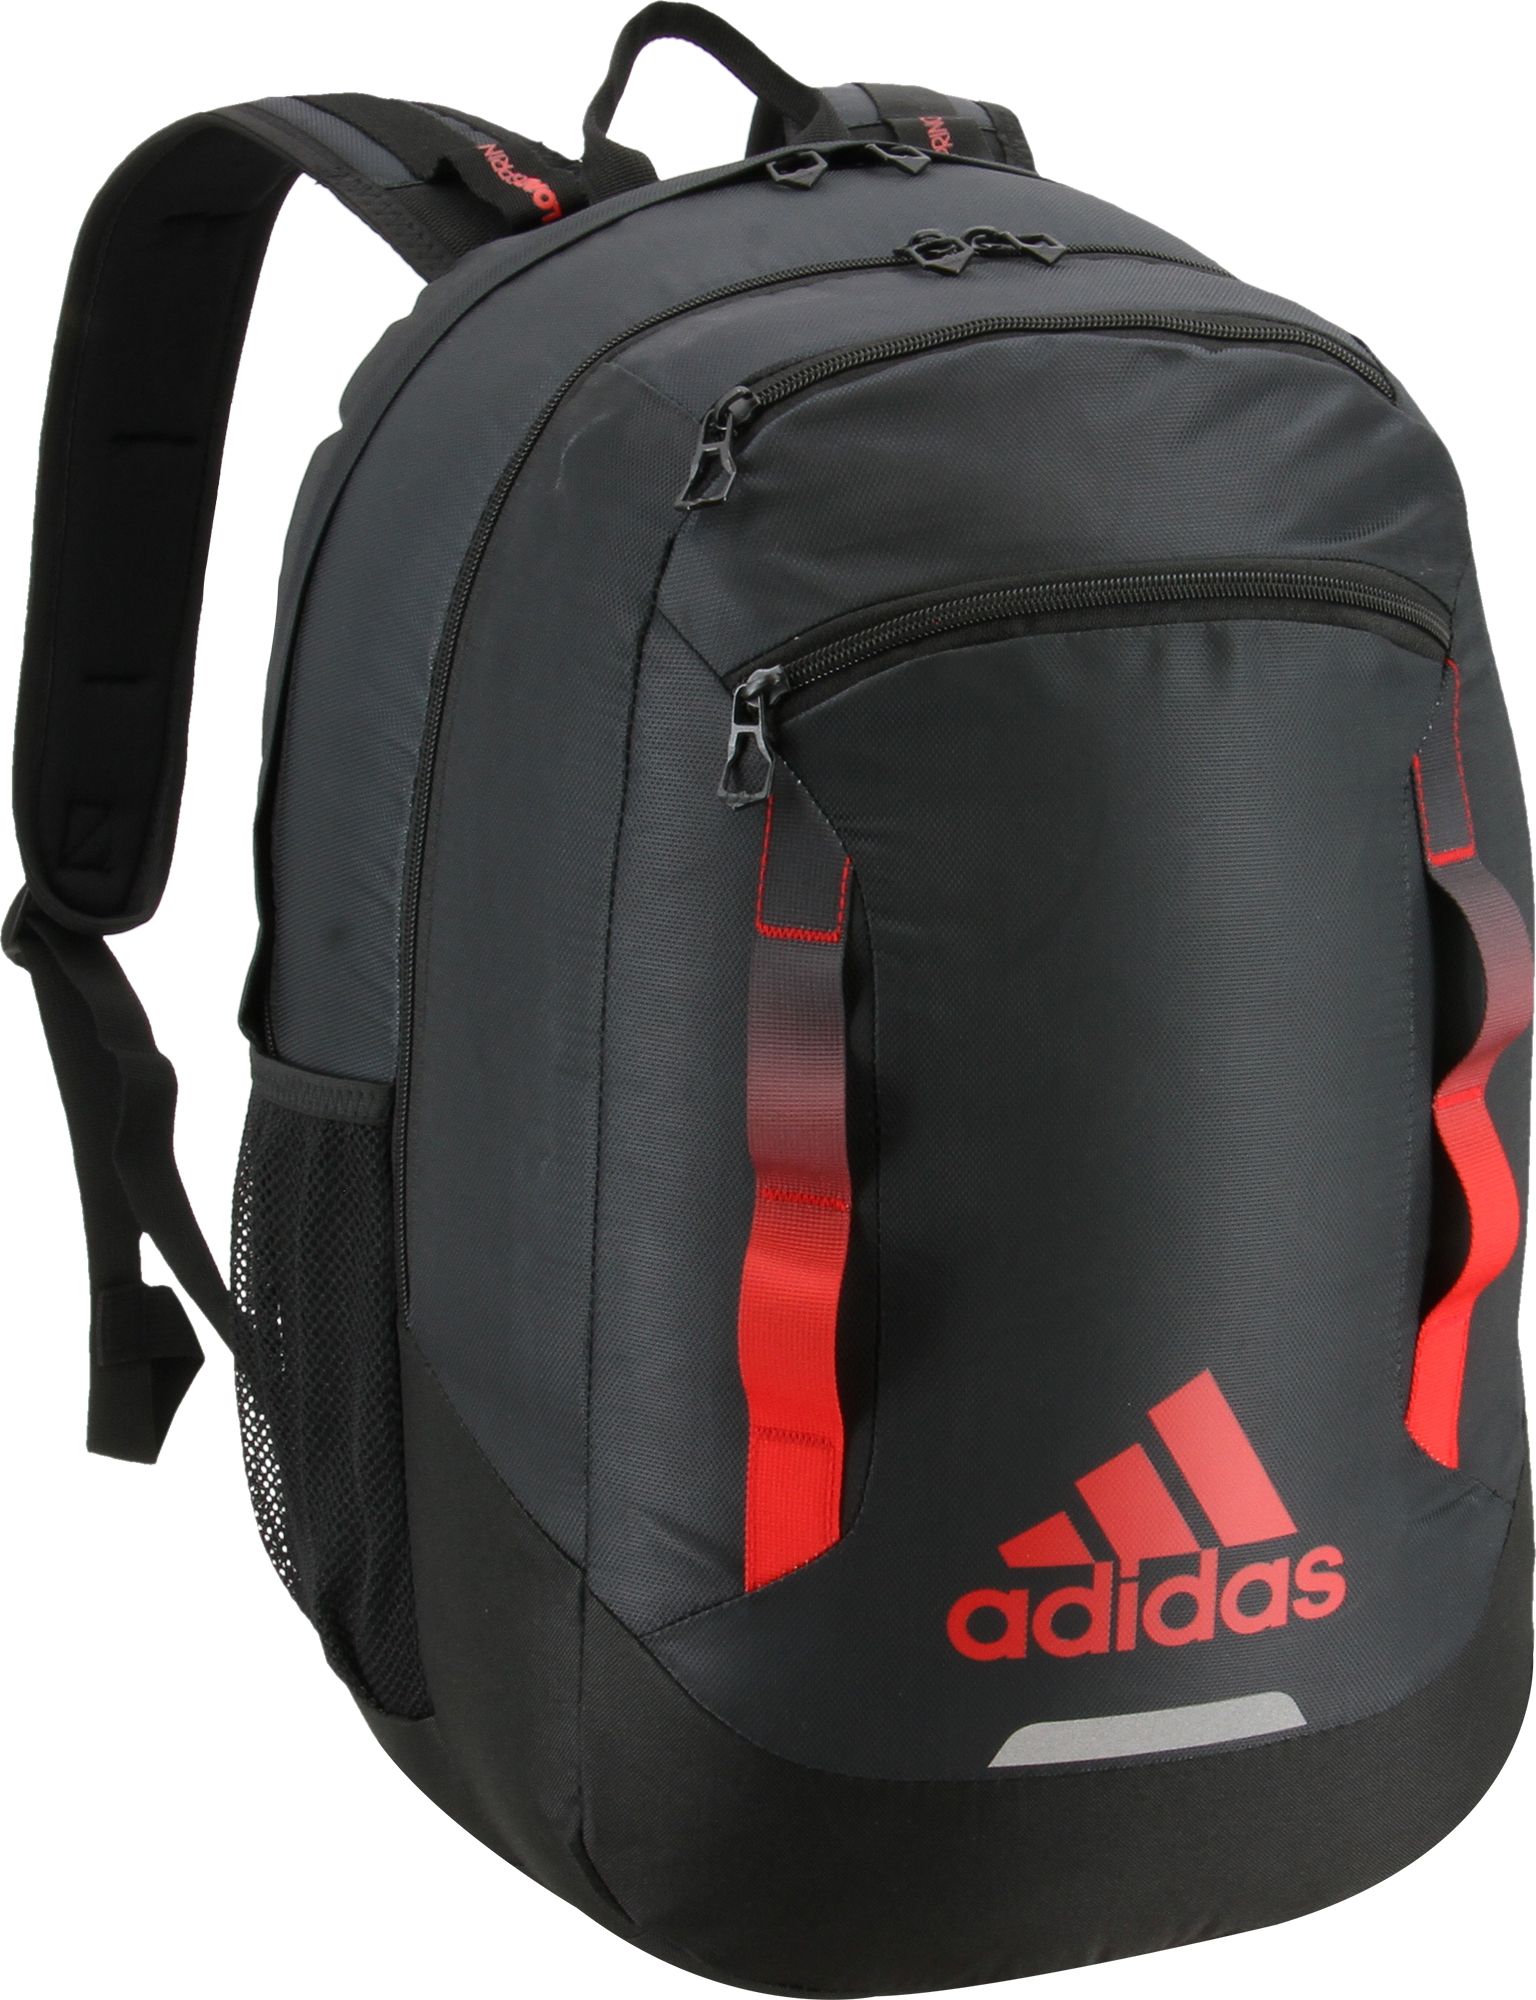 adidas rival backpack